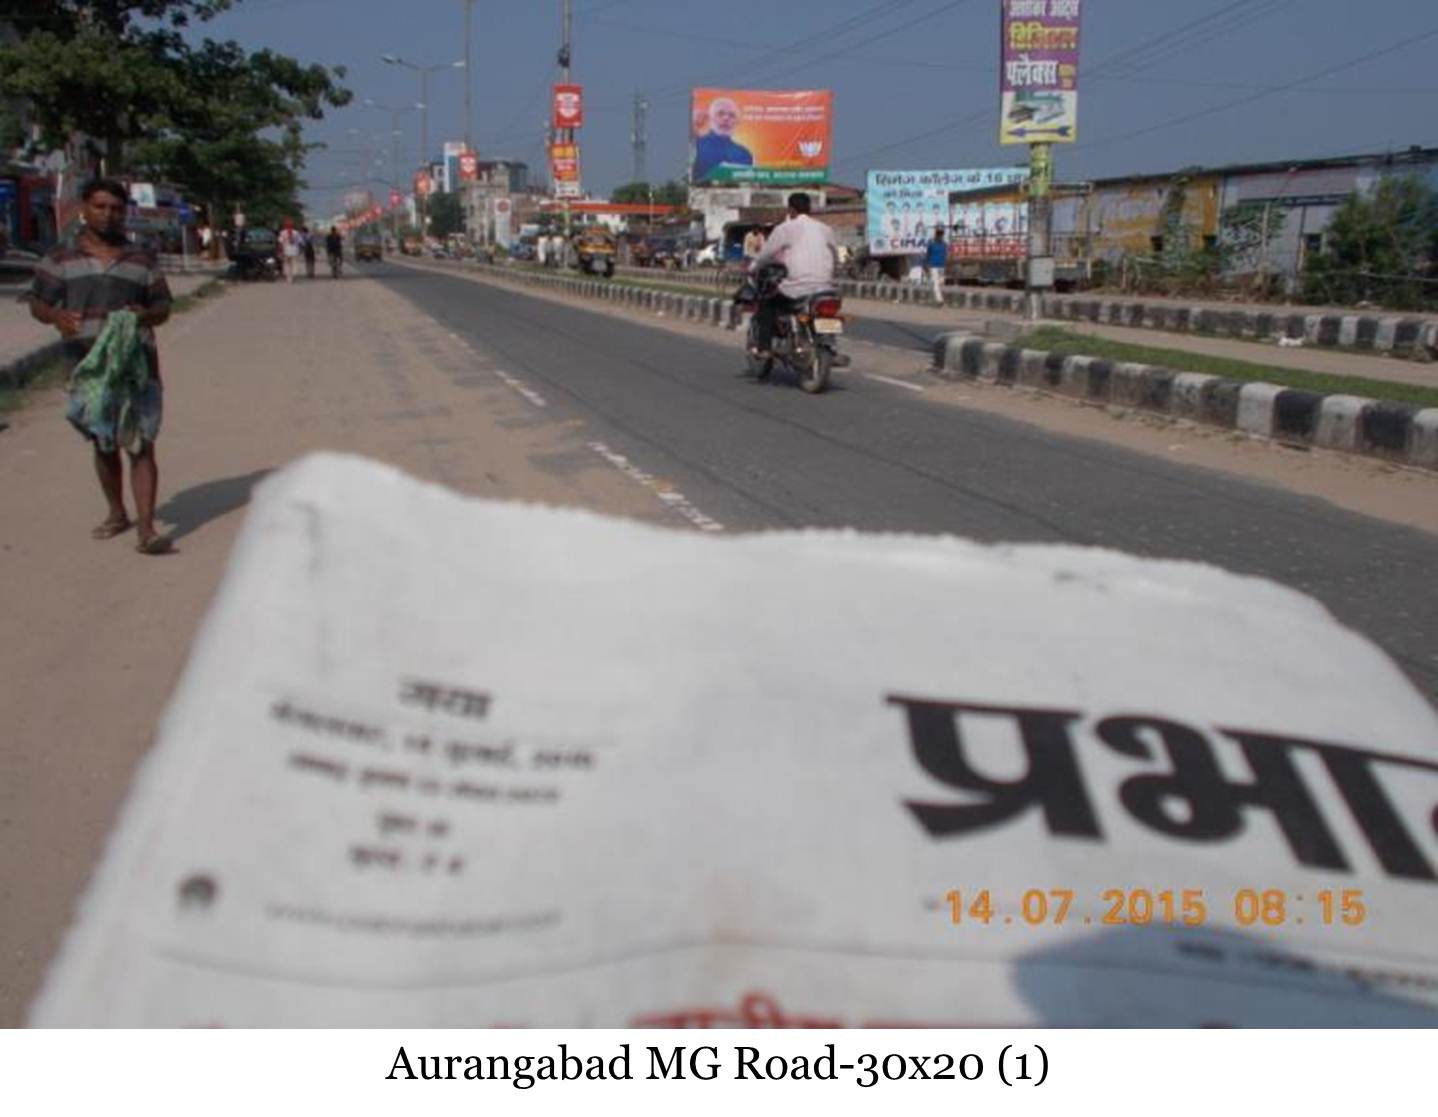 MG Rd, Aurangabad